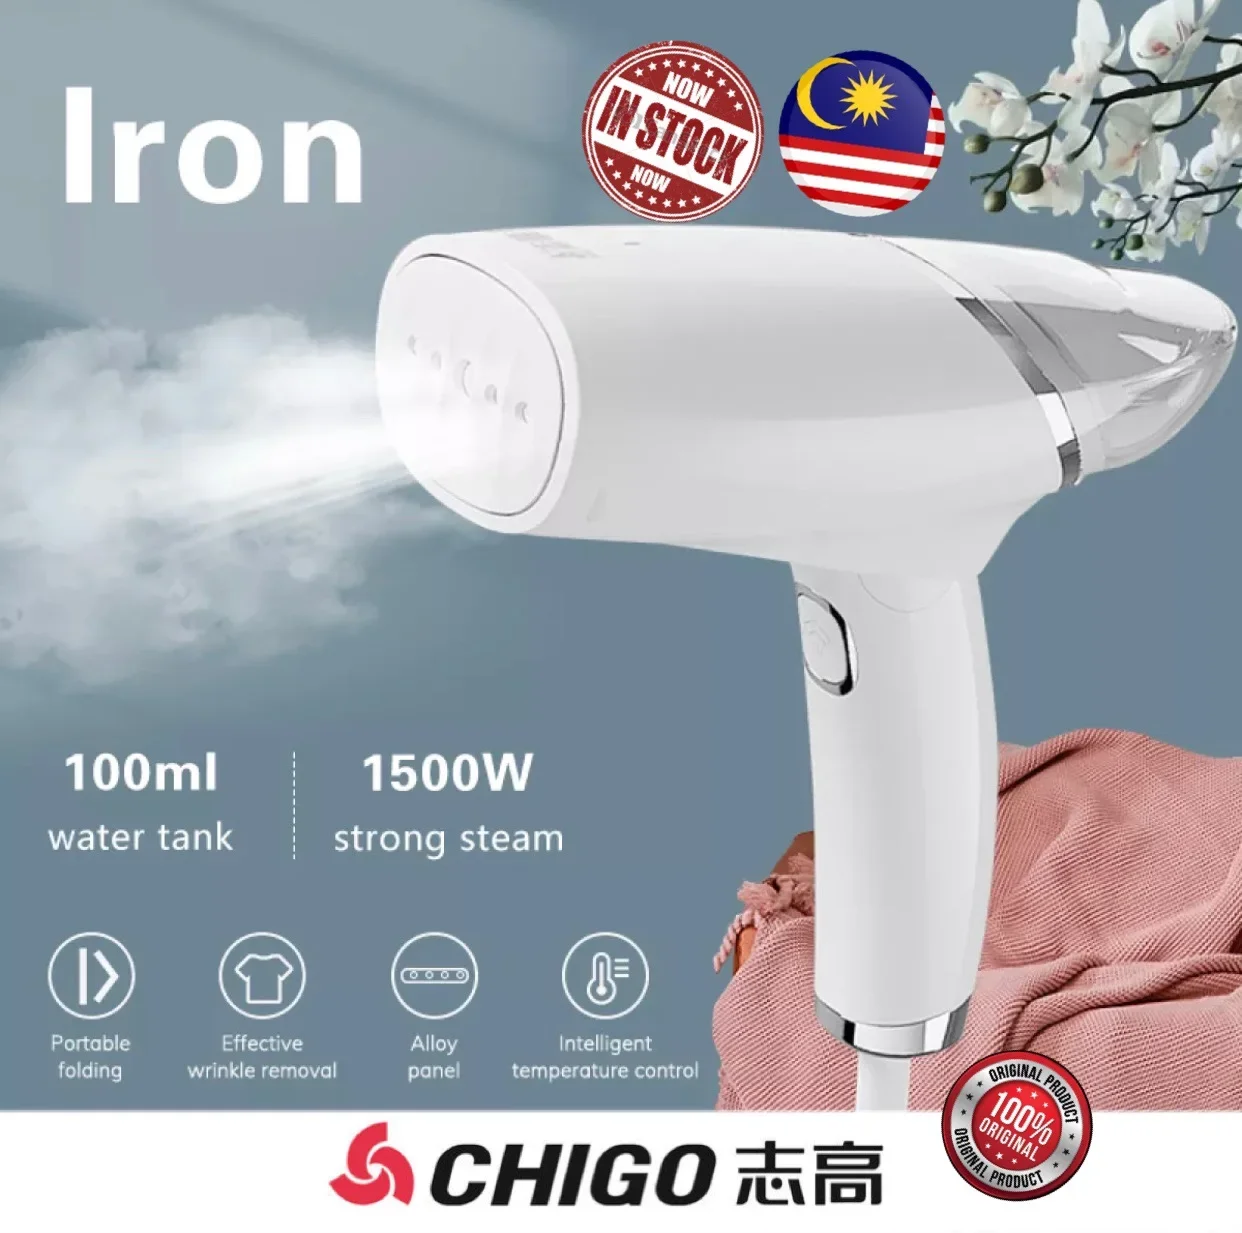 Chigo Portable Handheld Garment Steamer/1200W Travel&Household Steam Ironing/Seterika Stim (ready stock)